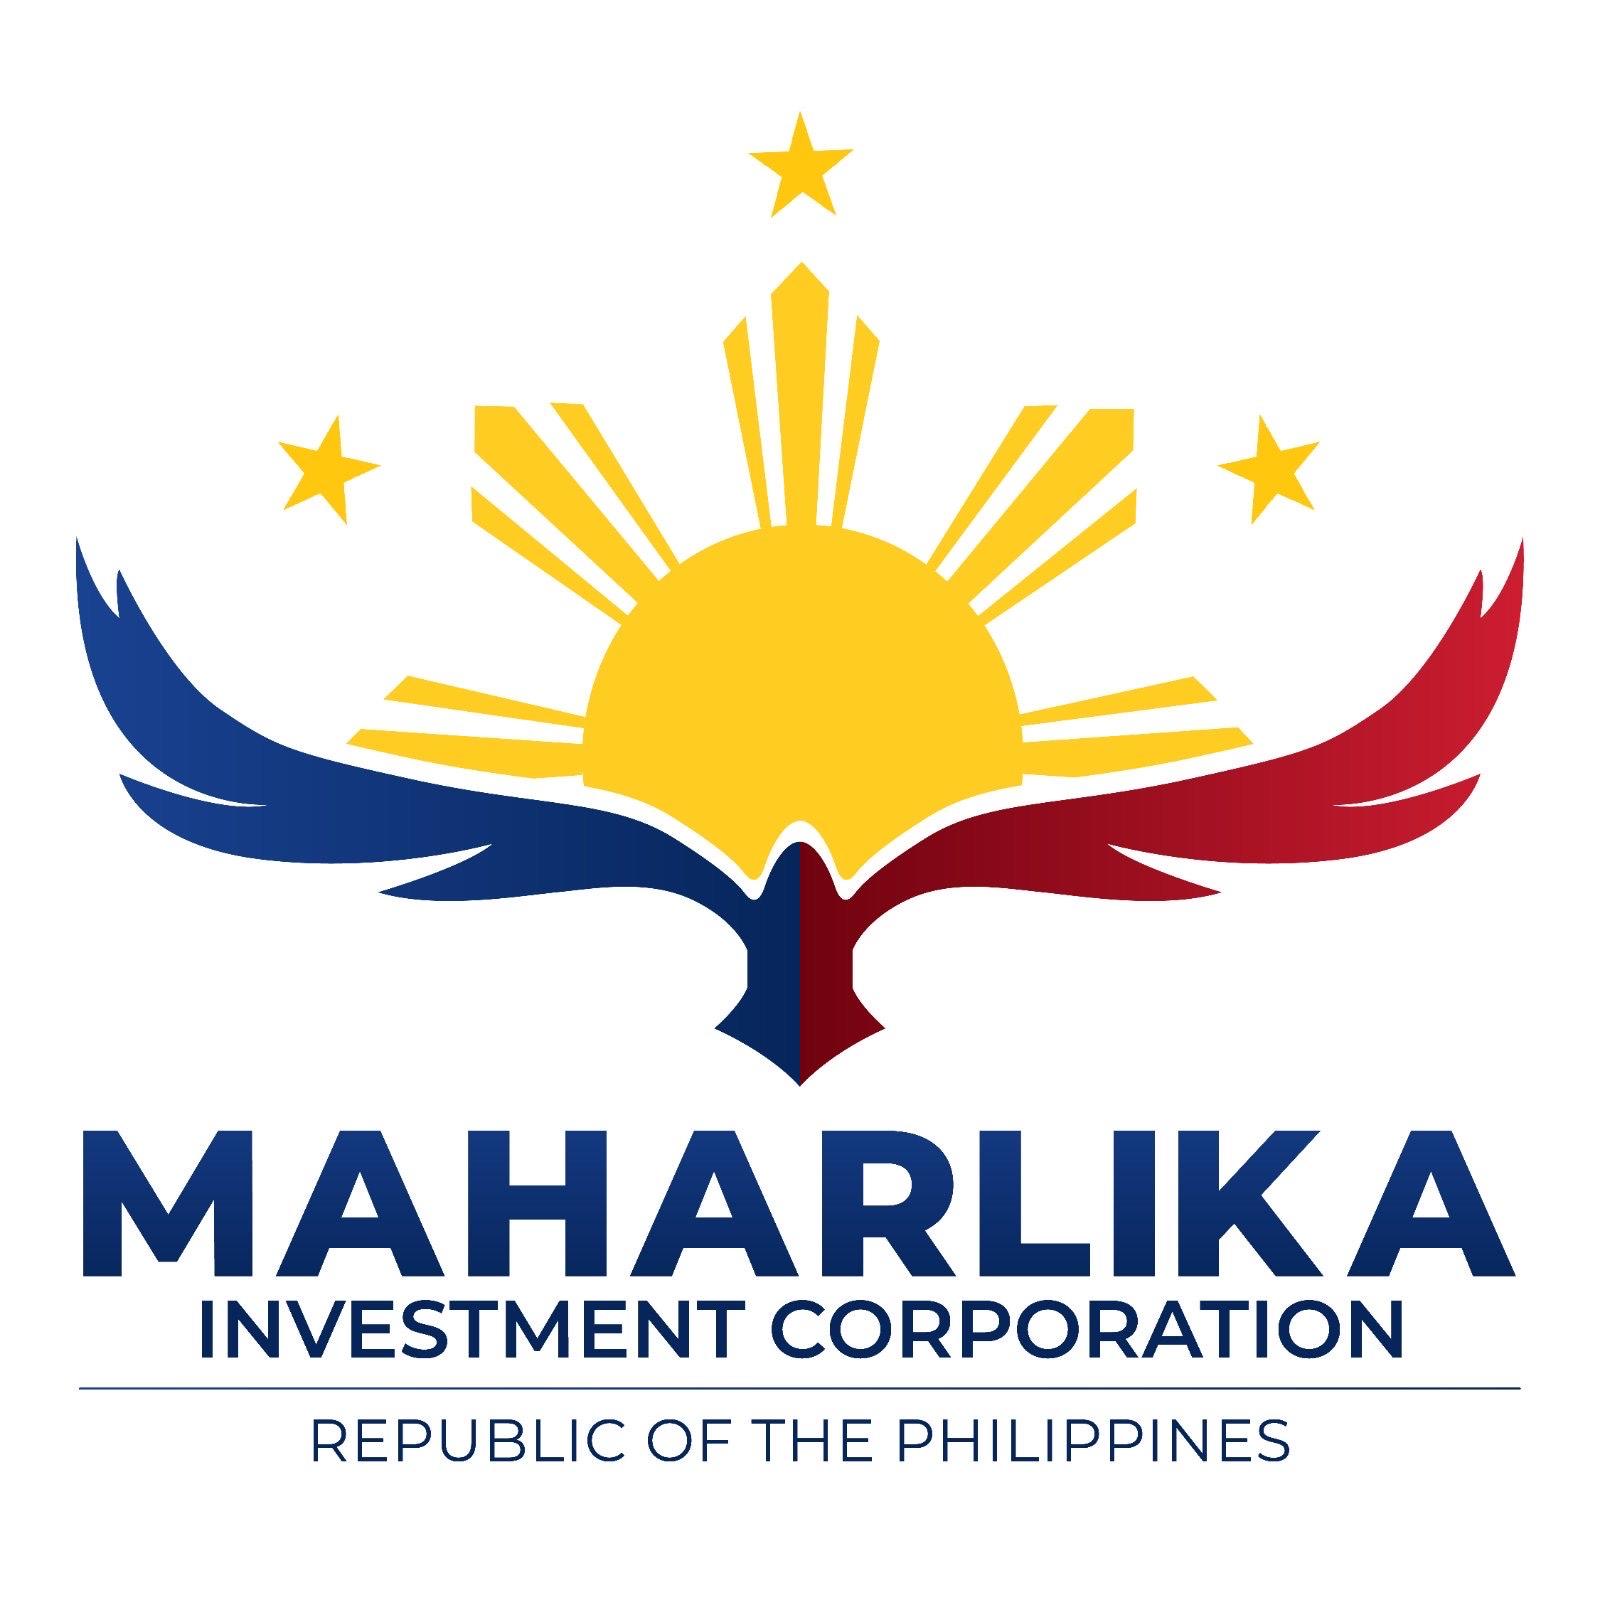 Maharlika Investment Corporation unveils official logo